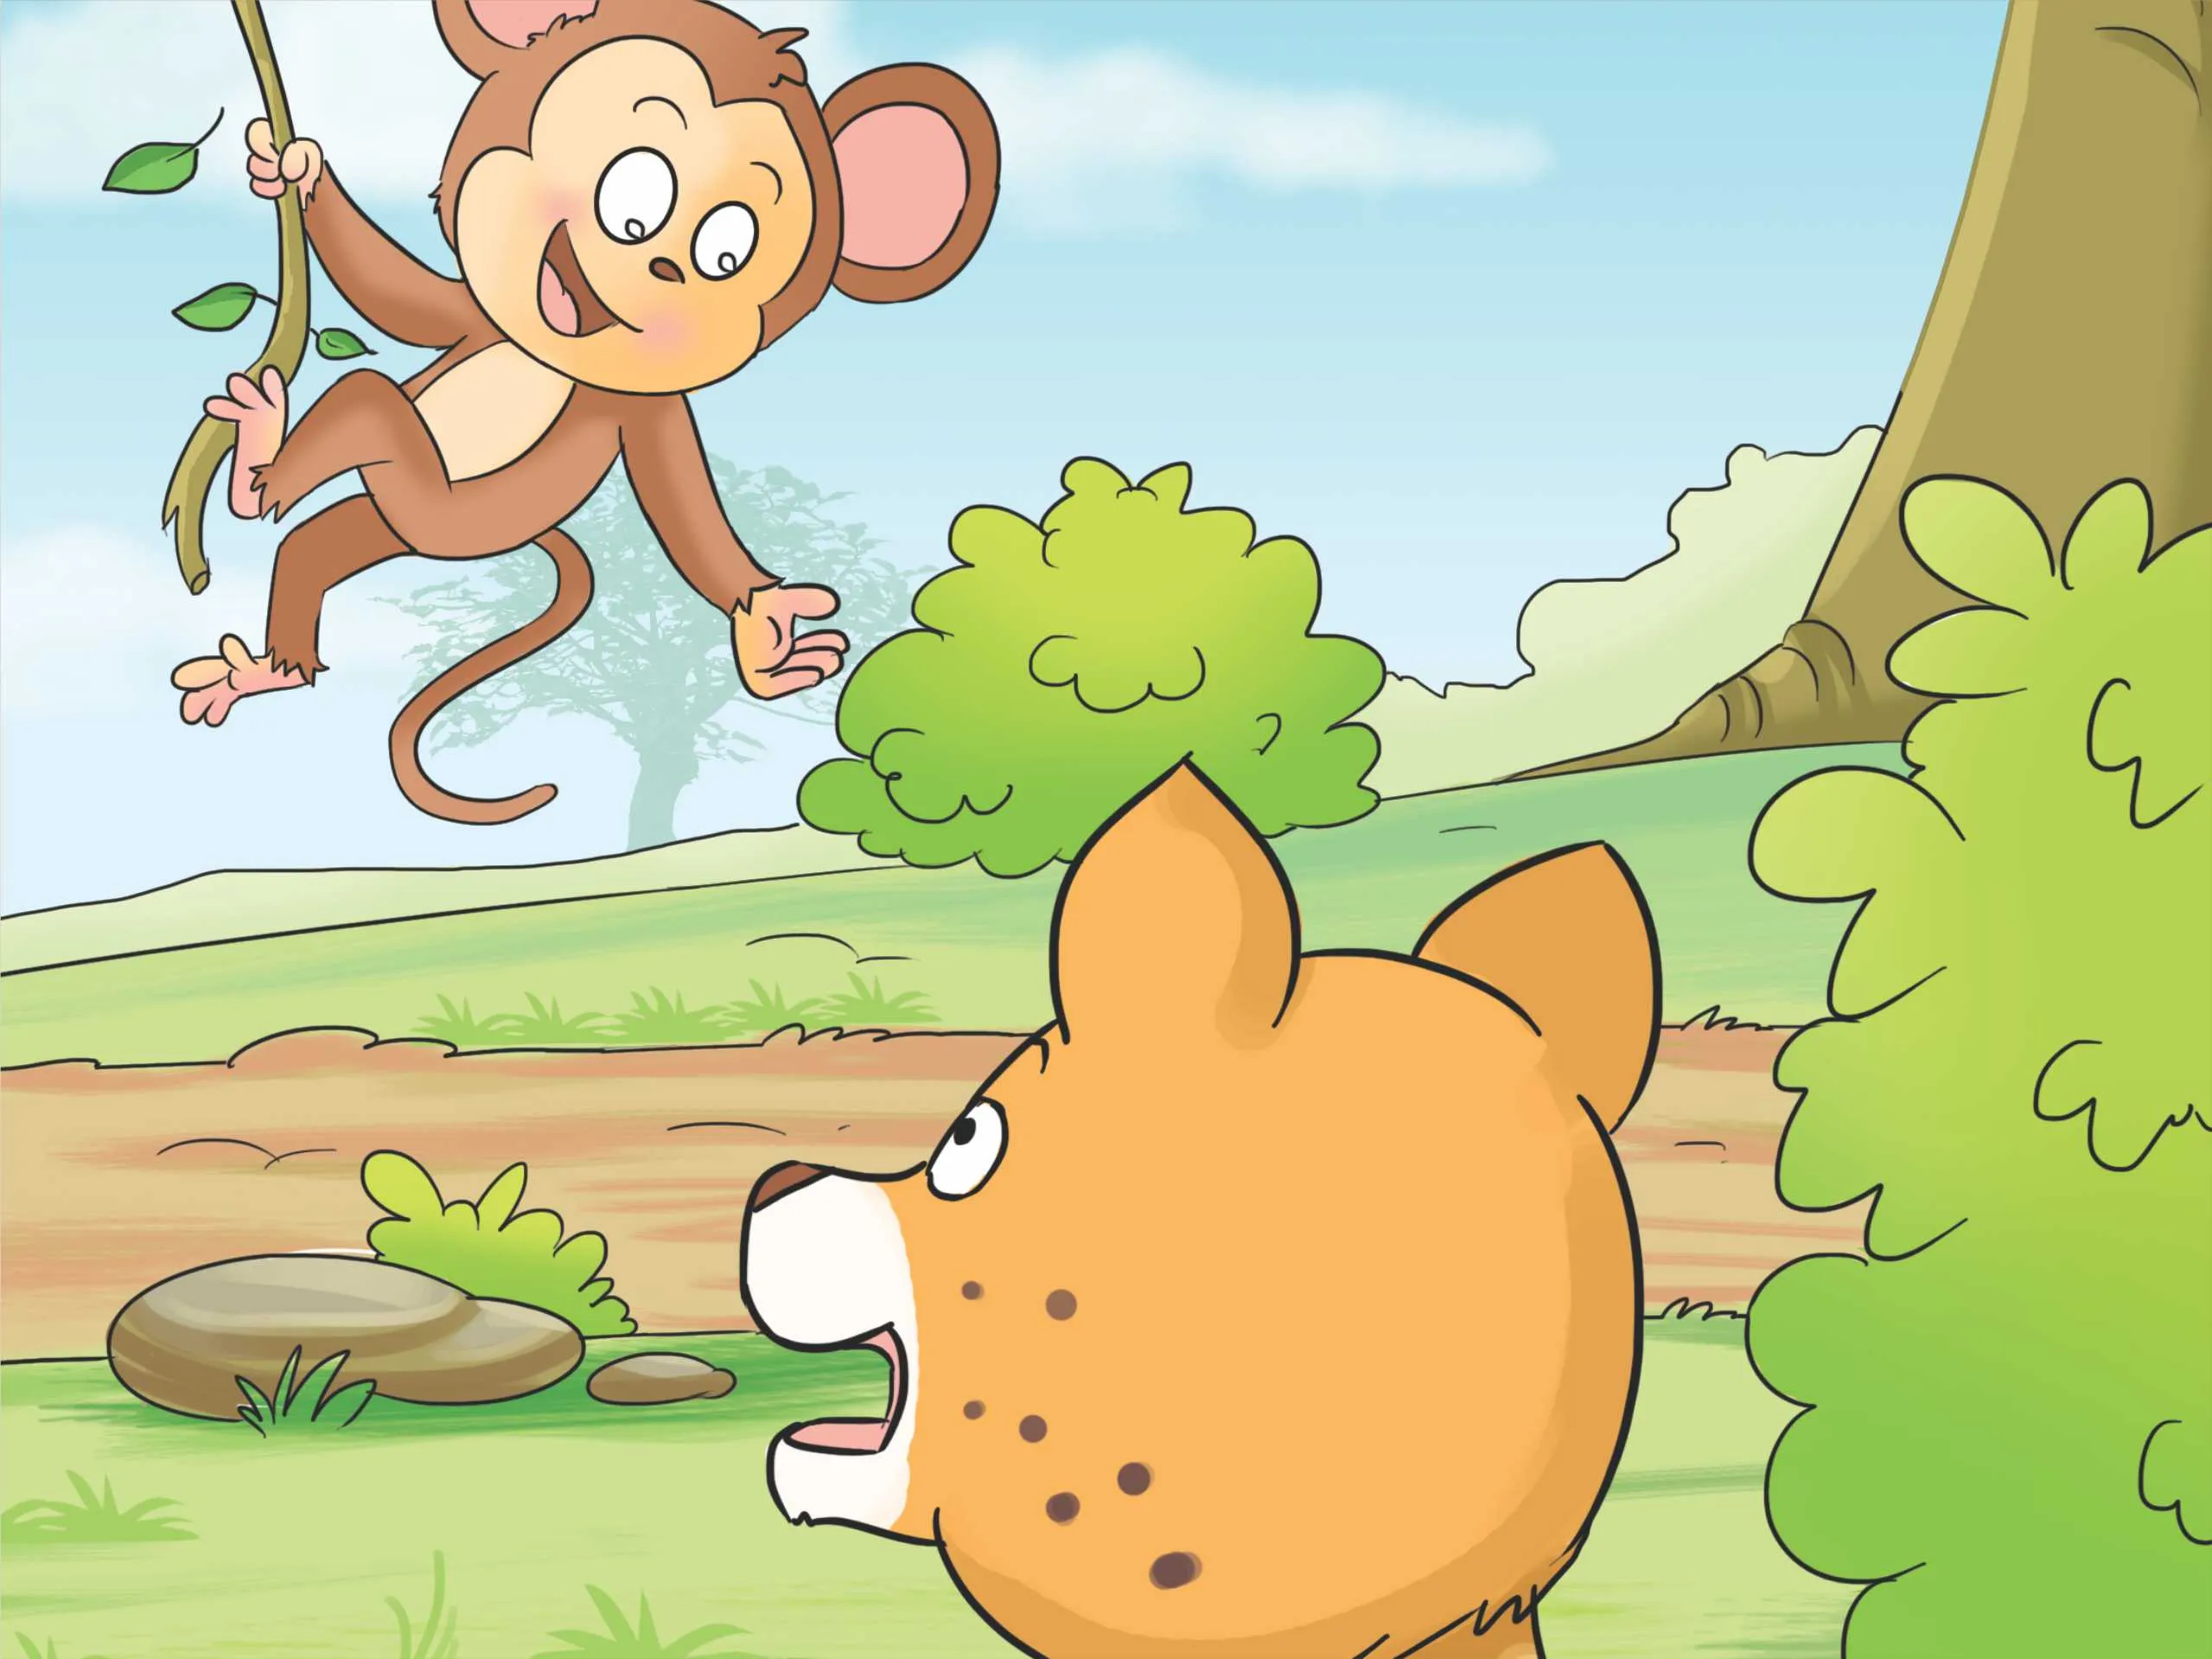 leopard and monkey cartoon image